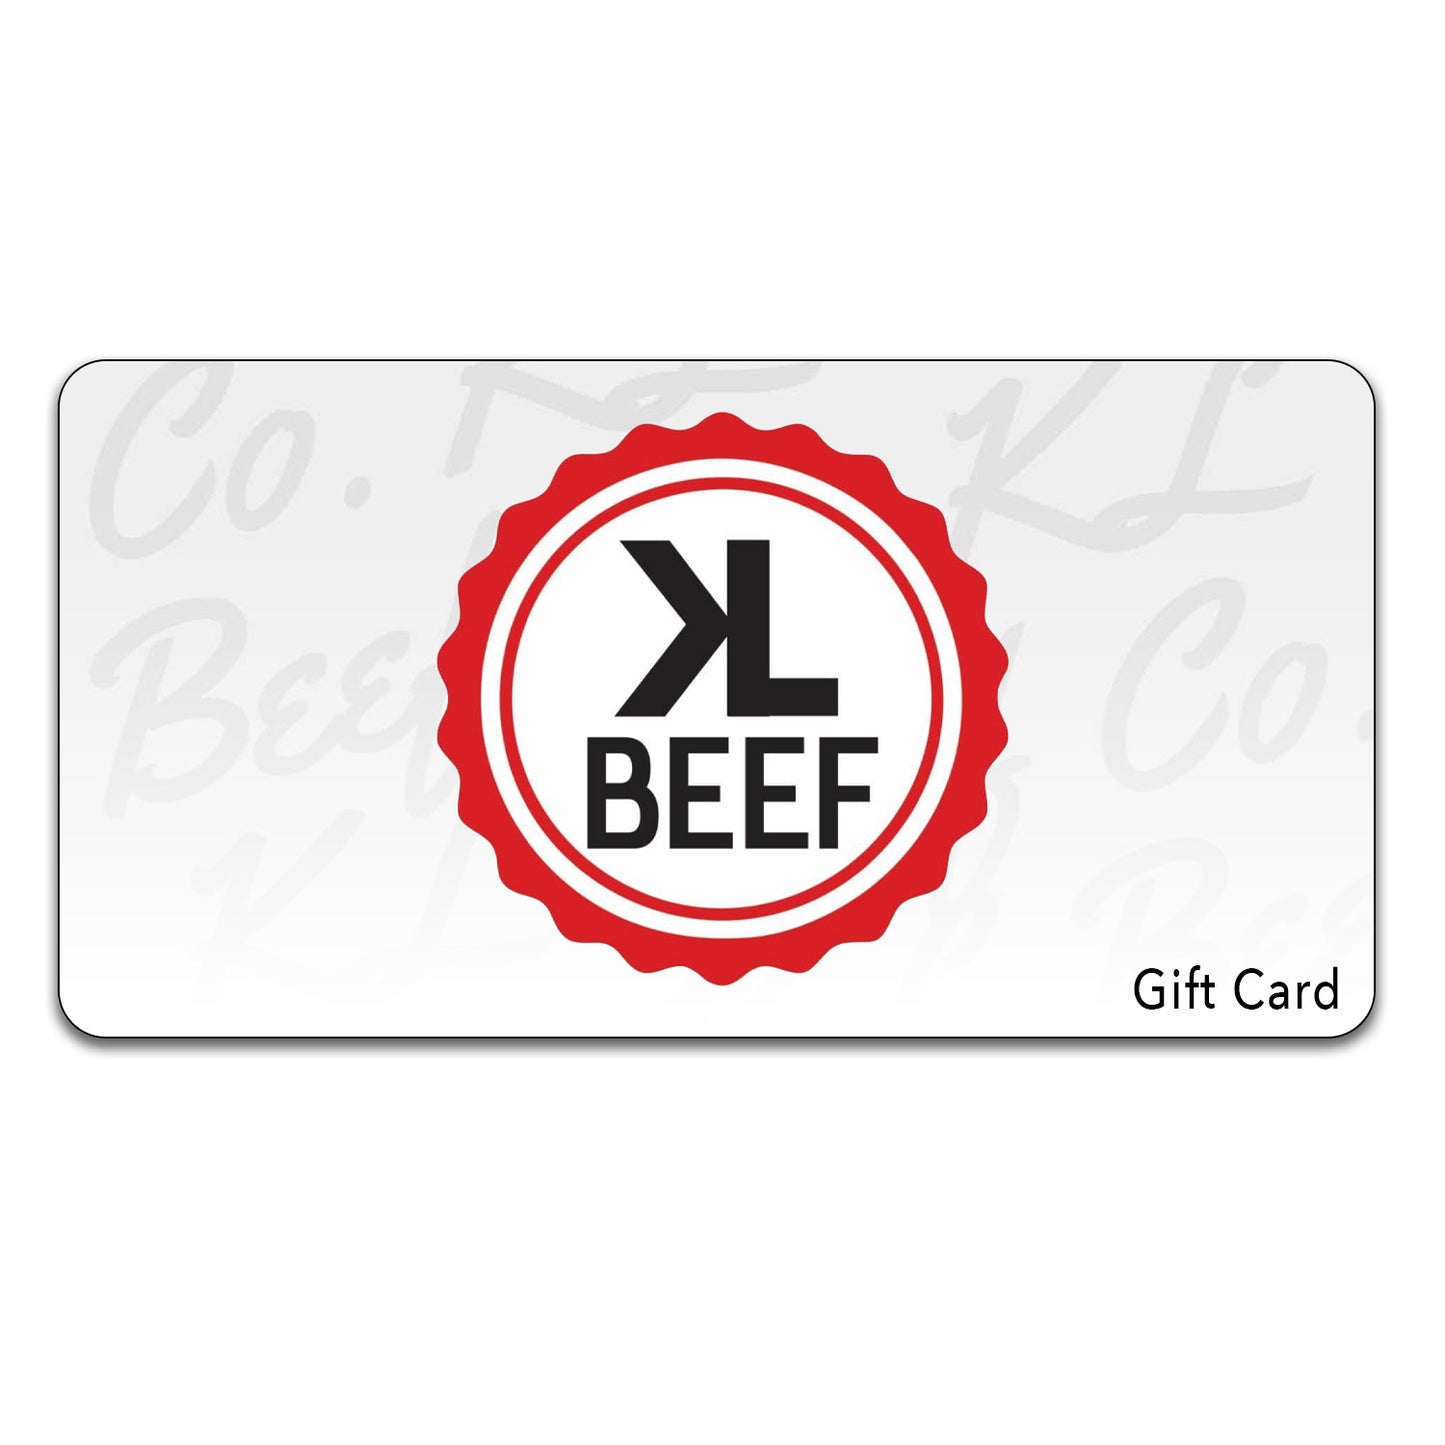 KL Beef Gift Card, klbeefco.com